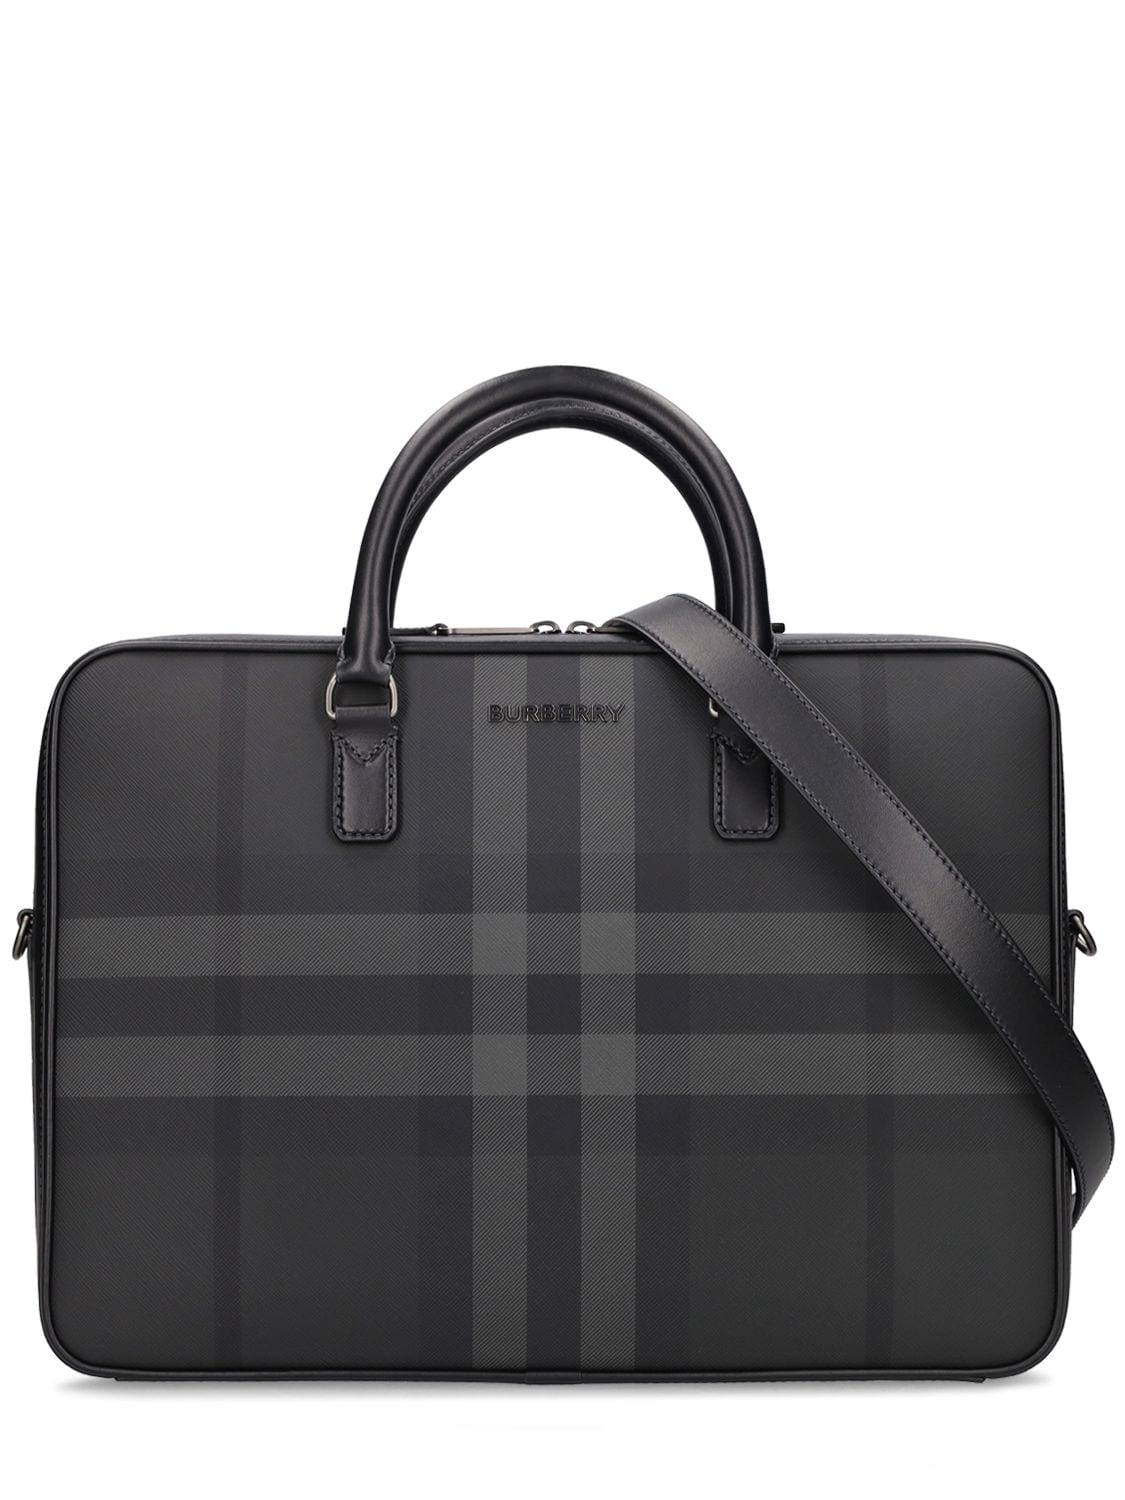 Image of Check Briefcase Bag